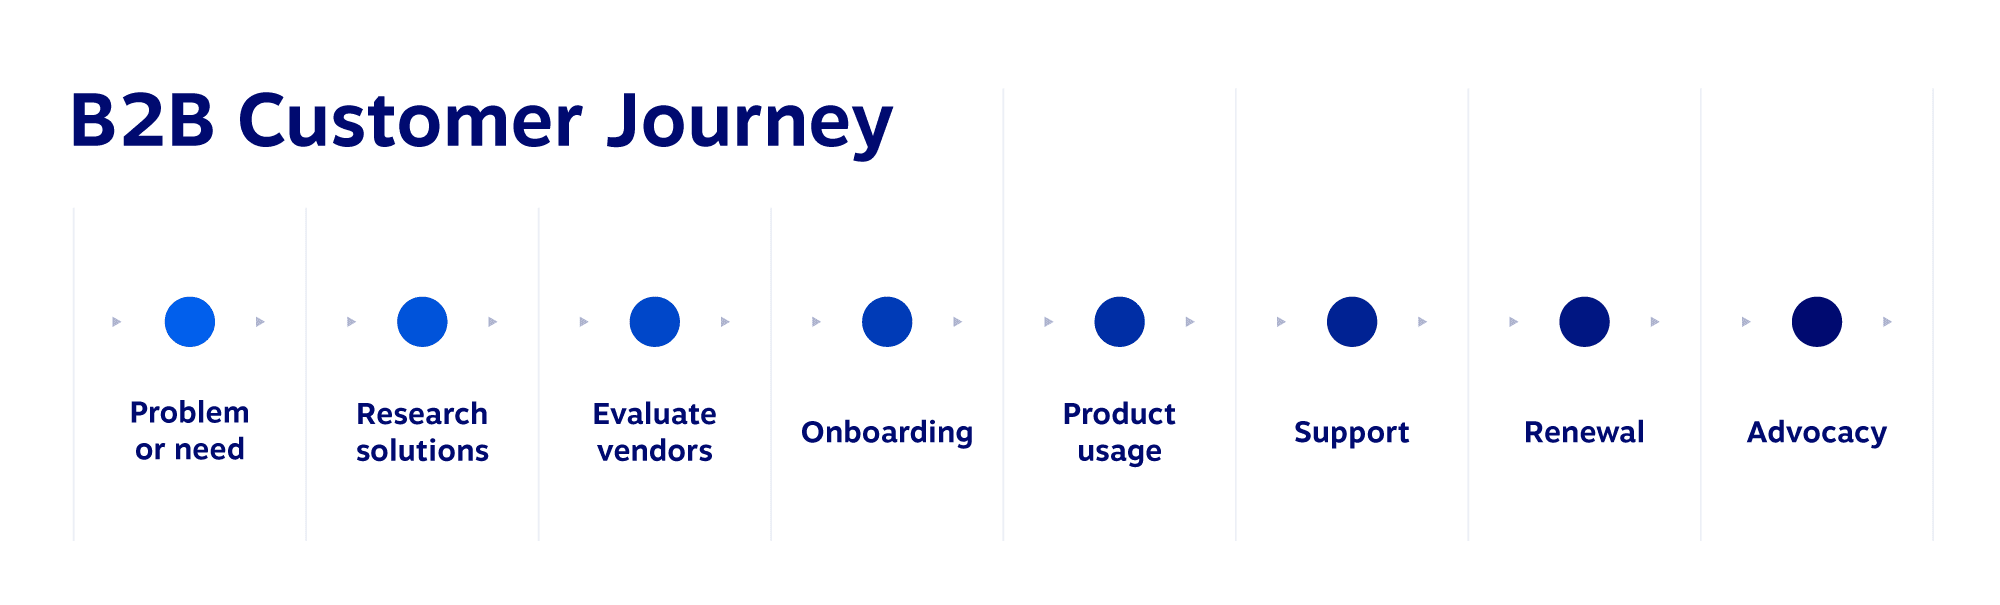 B2B Customer Journey Diagram